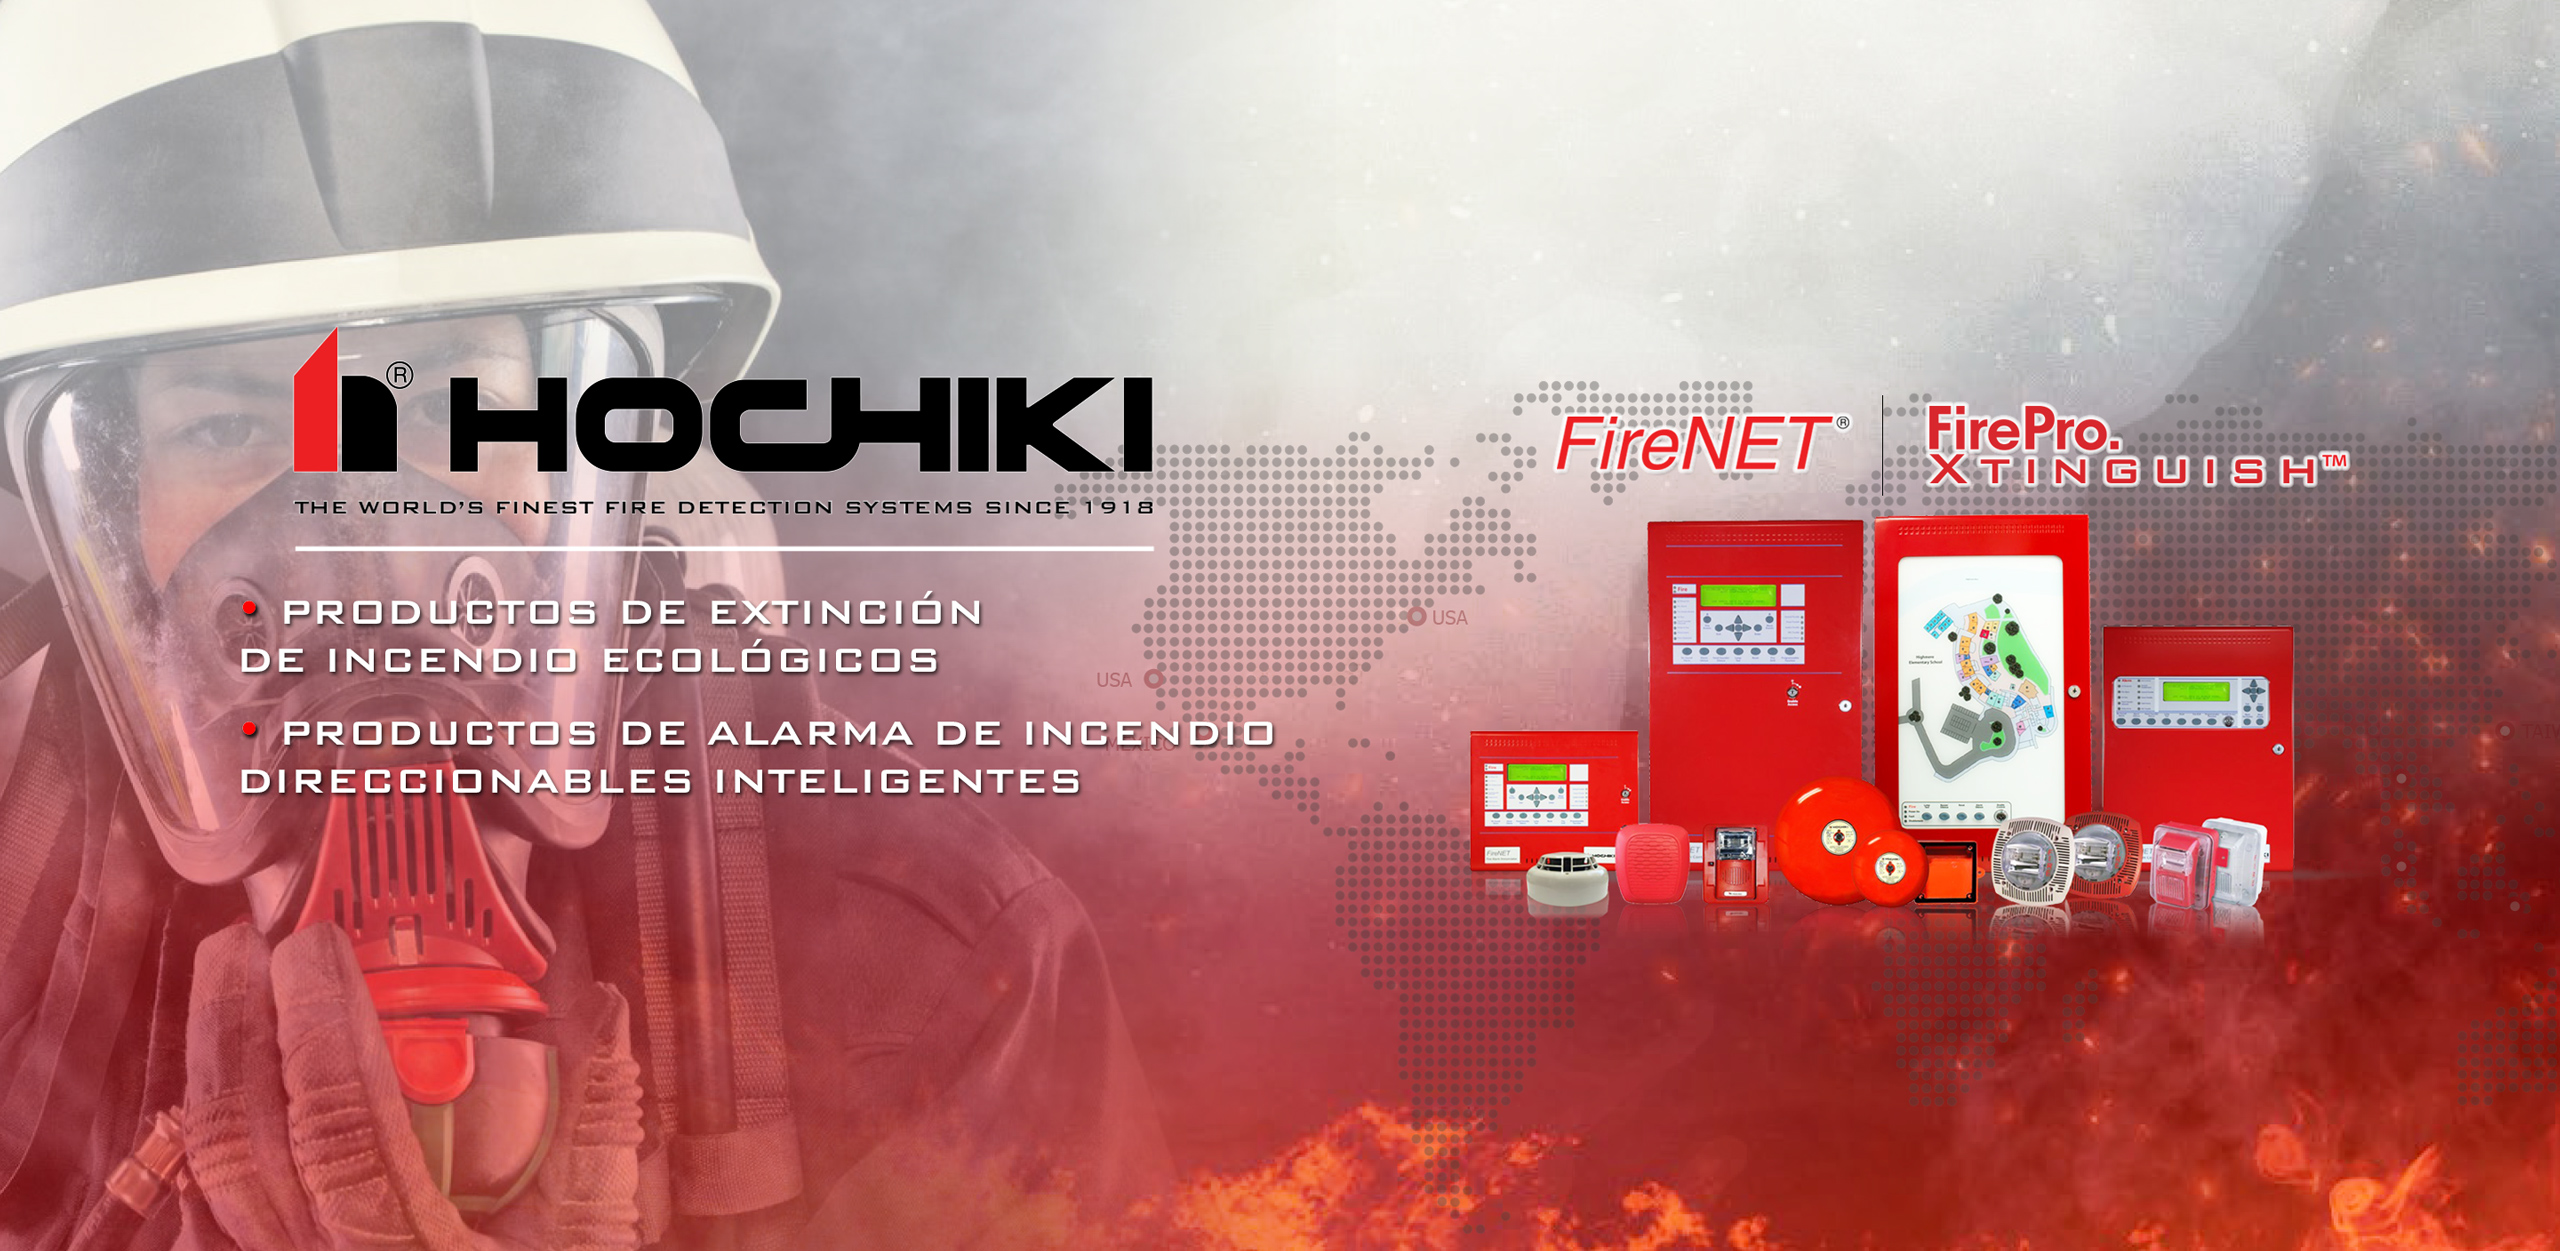 Hochiki_MAGOCAD_Web_2020_firenet_fire_xtinguish